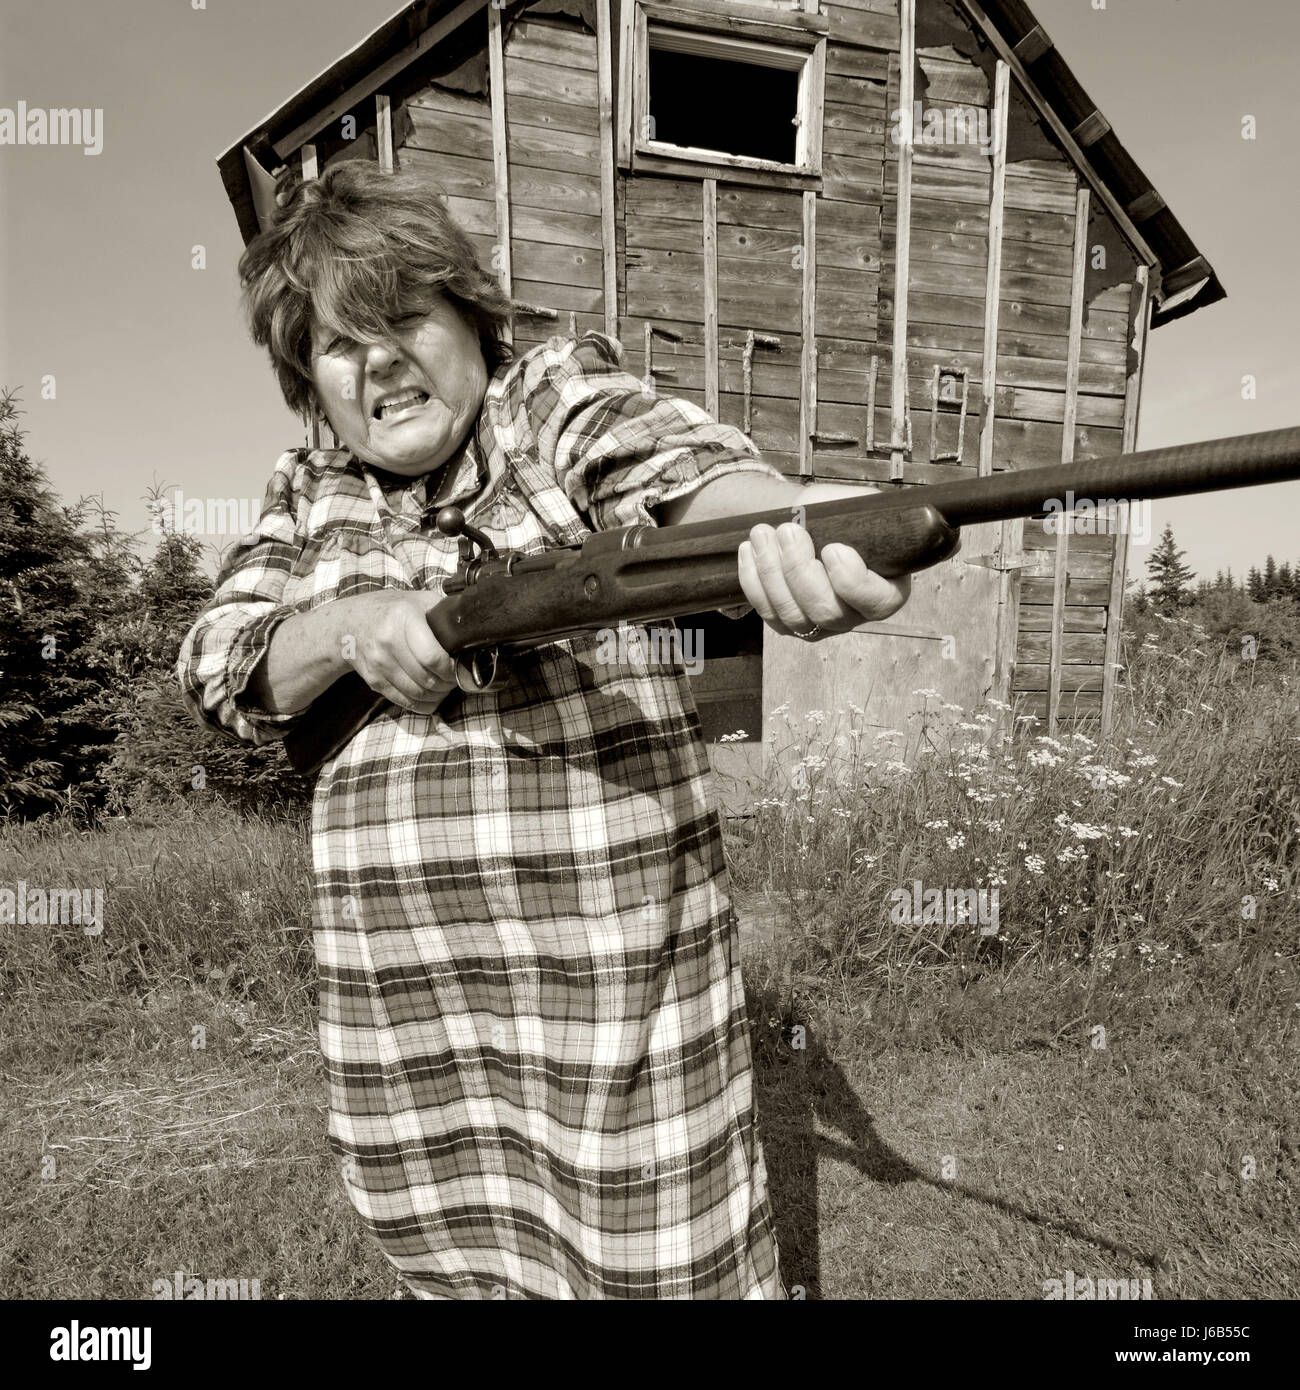 woman-sepia-rifle-arm-weapon-country-gun